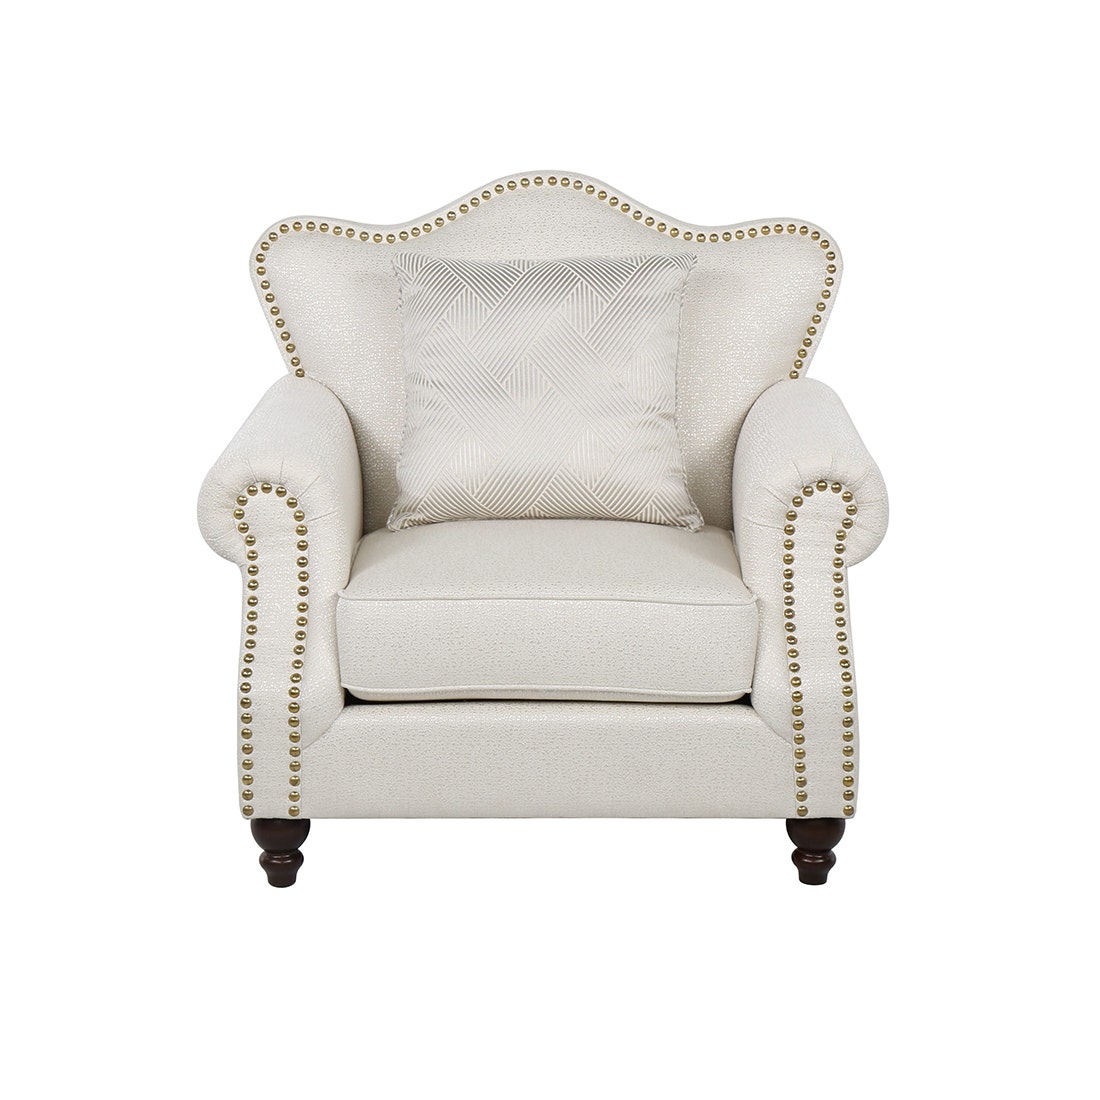 19185840-hemesia-furniture-sofa-recliner-sofas-01